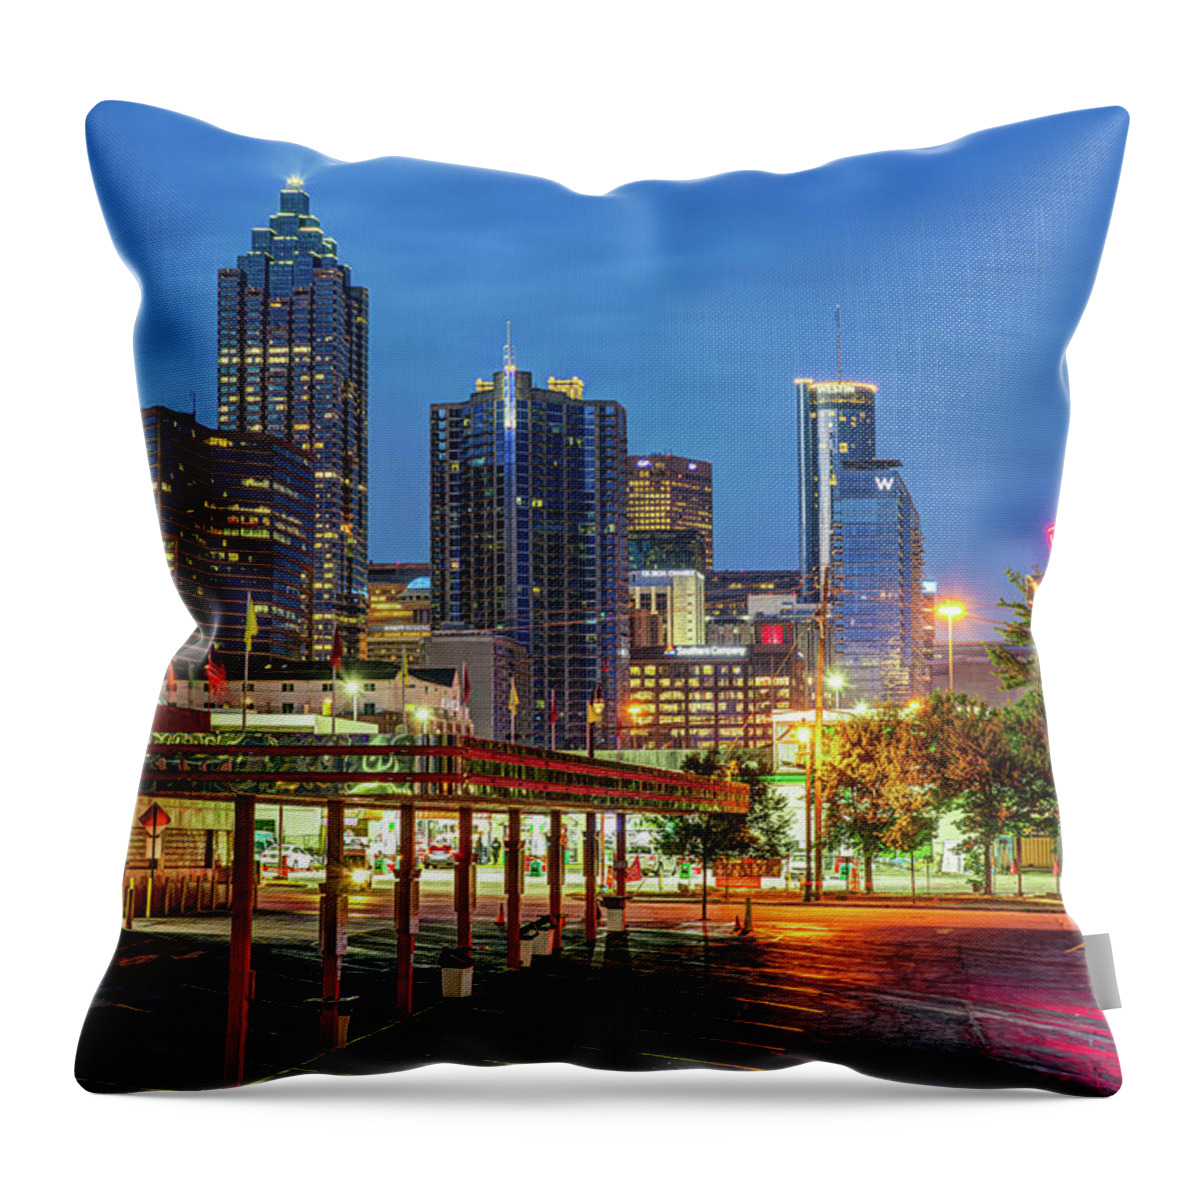 Atlanta Skyline Throw Pillow featuring the photograph Atlanta Skyline Over the Varsity at Dusk by Gregory Ballos